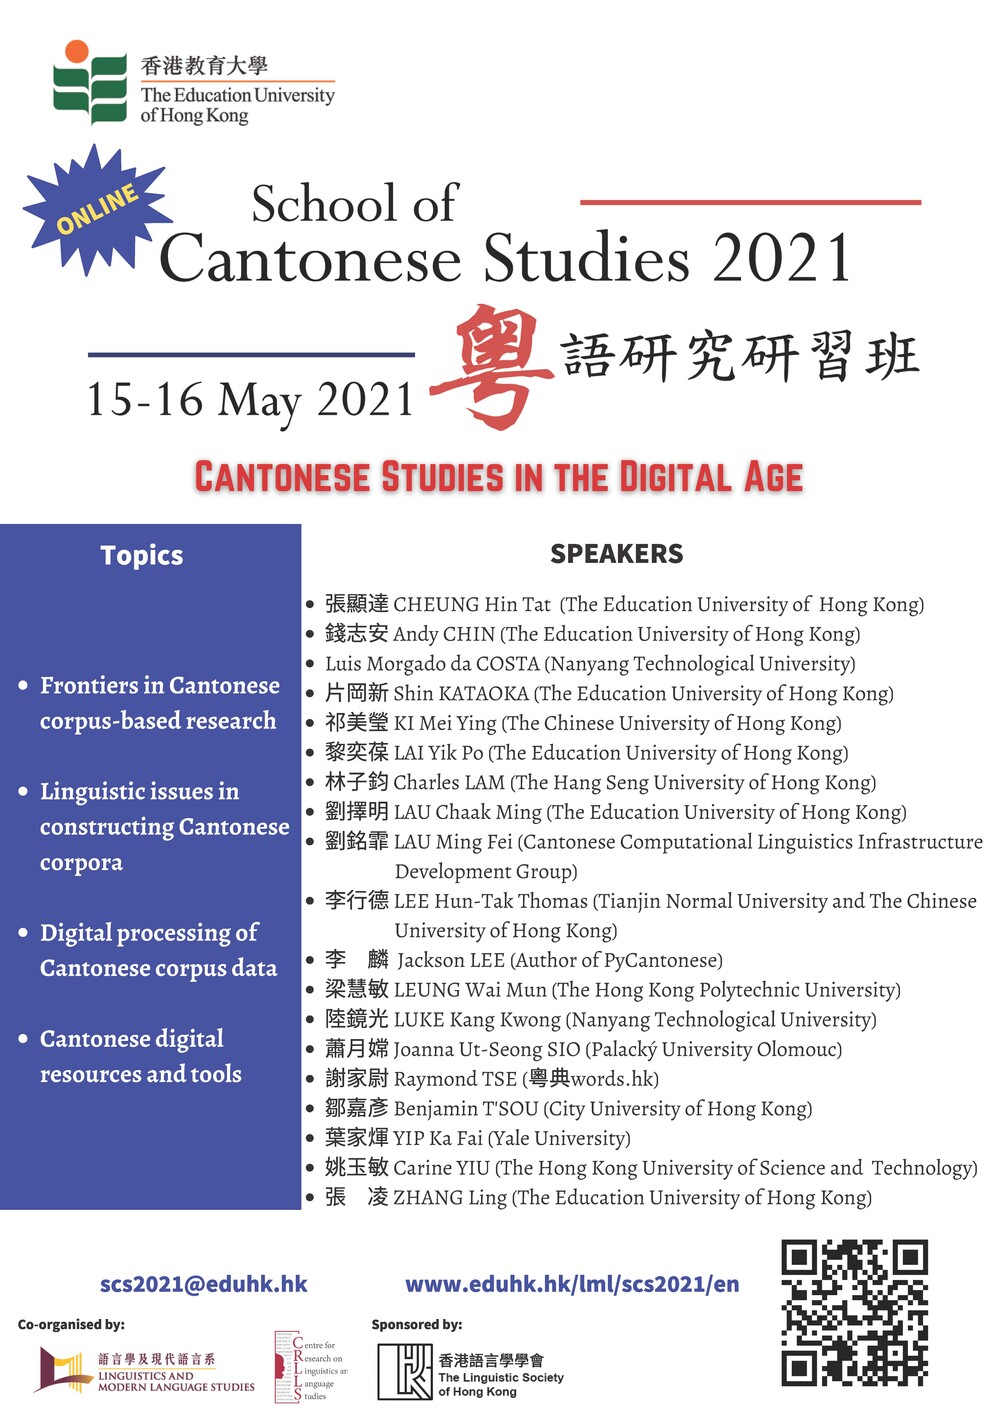 The School of Cantonese Studies 2021